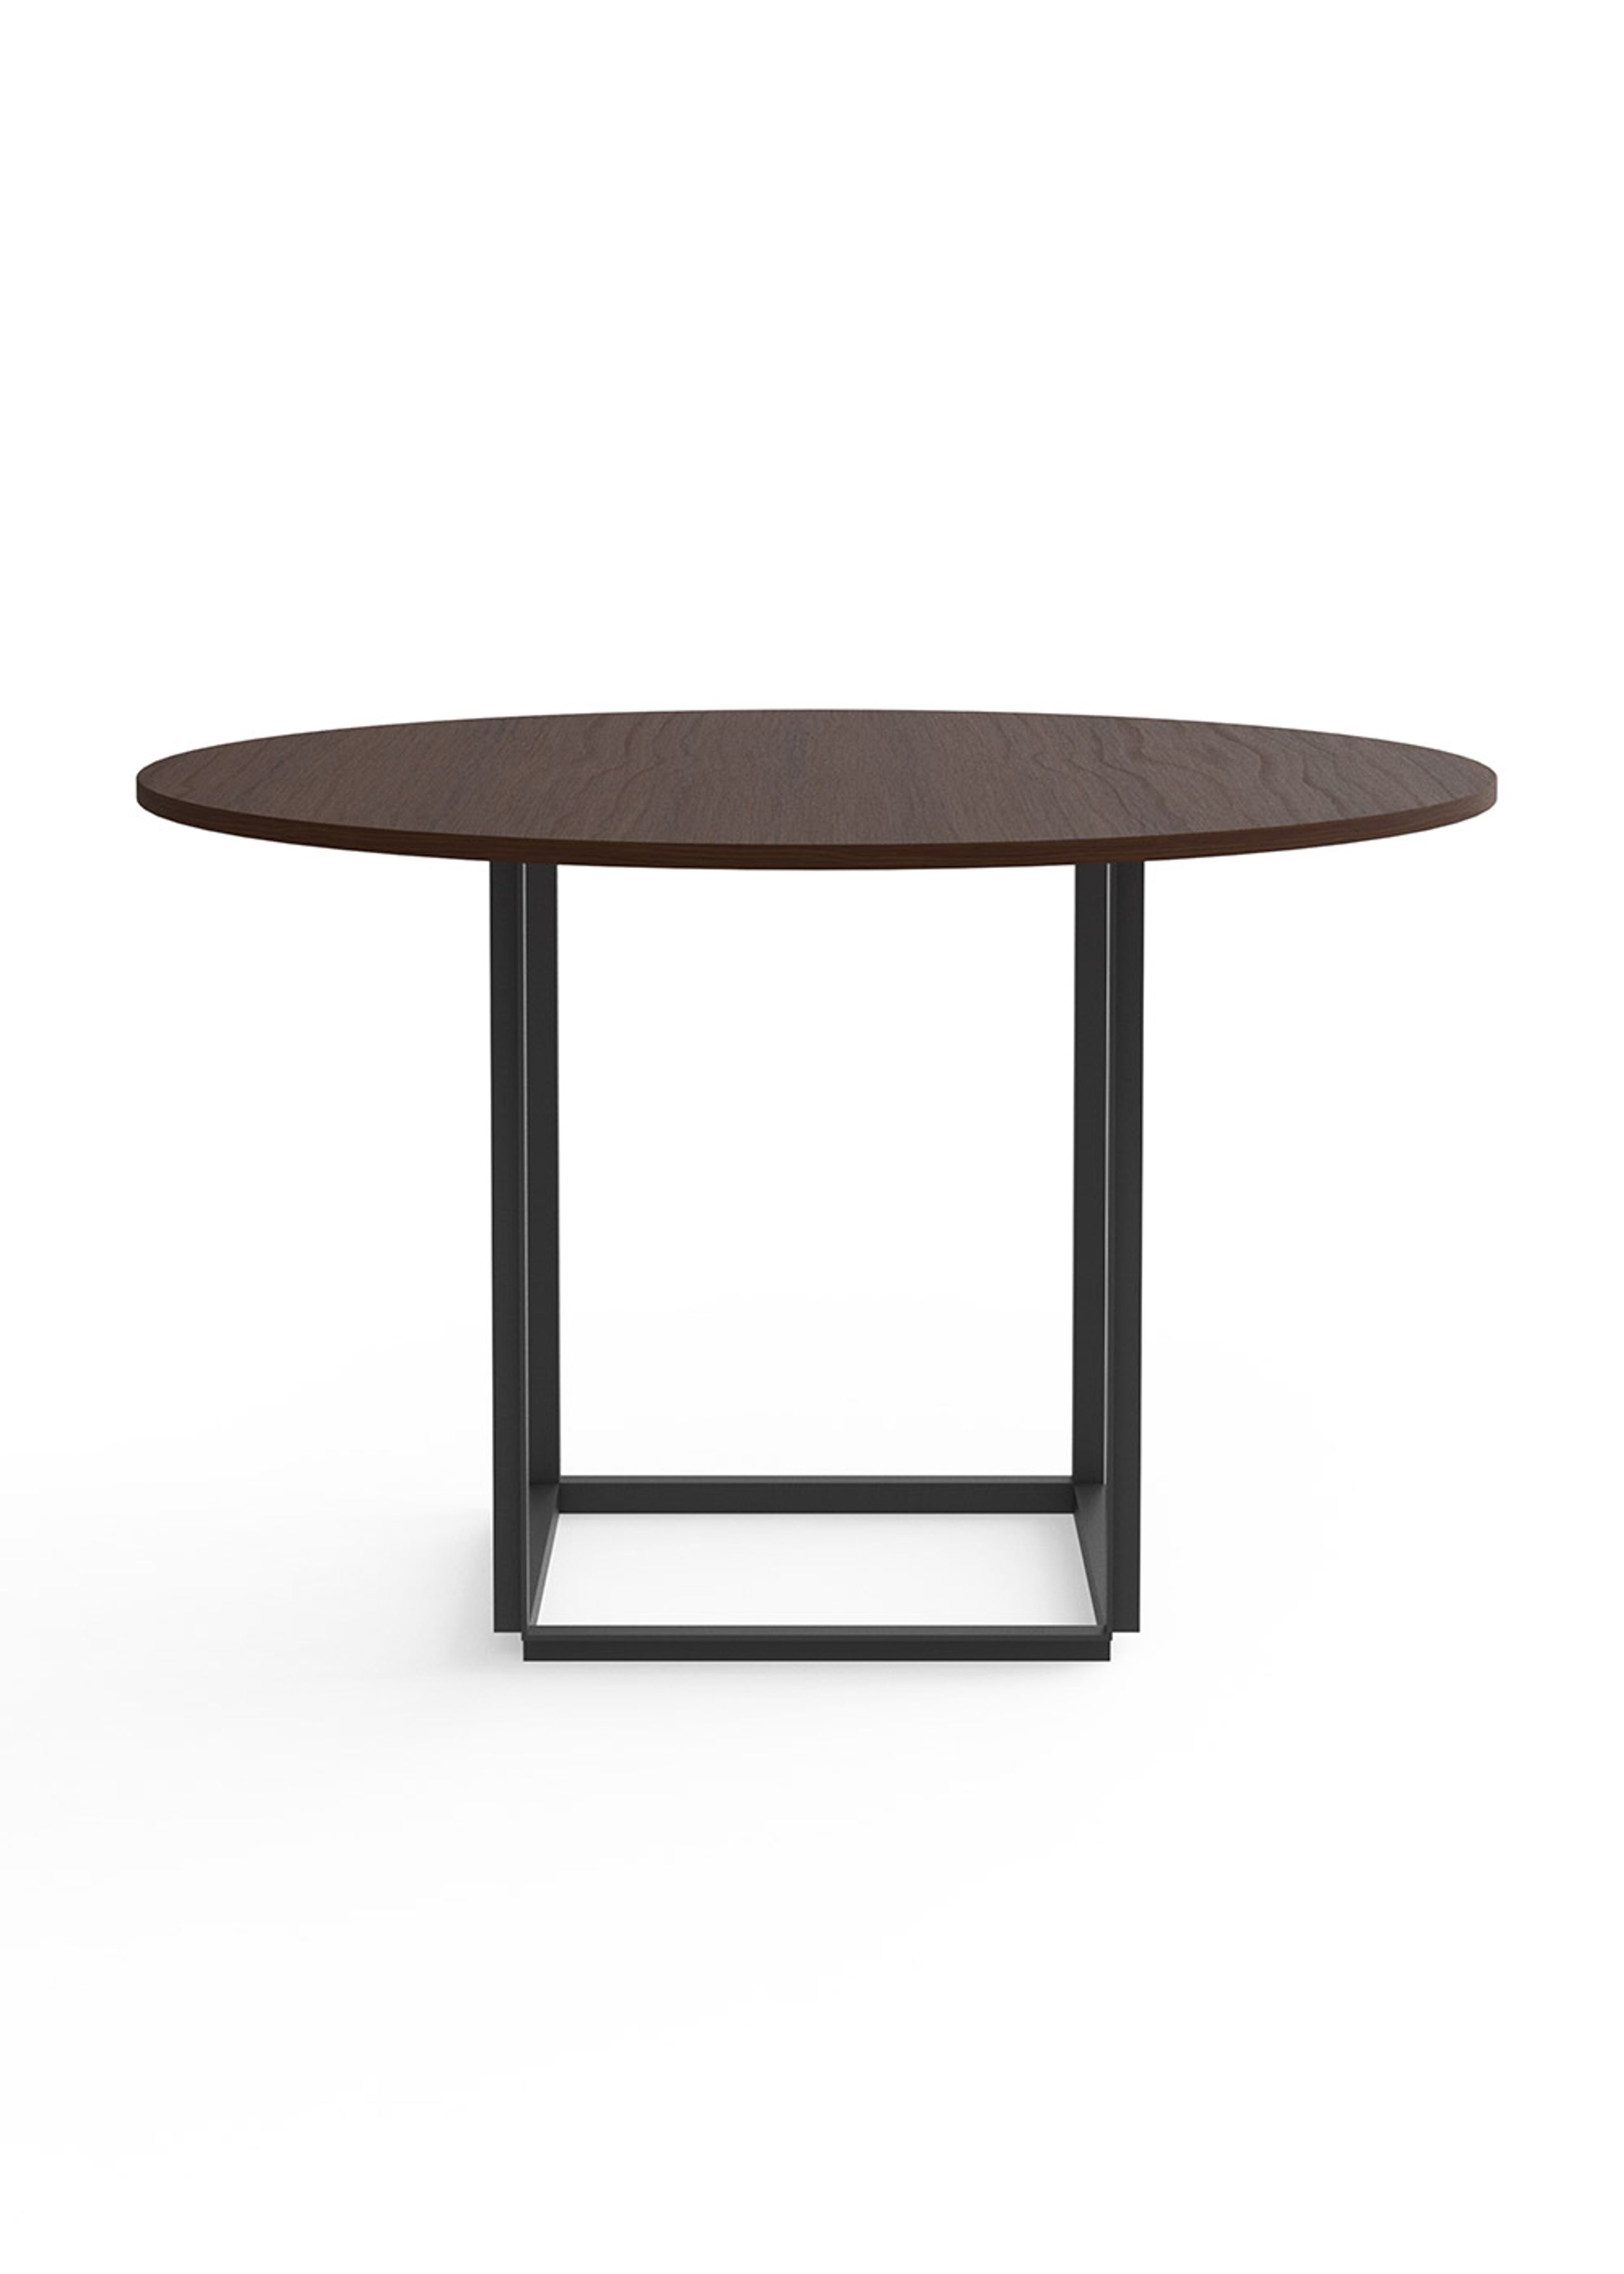 New Works - Spisebord - Florence Dining Table Ø120 - Smoked oak w. Black Frame